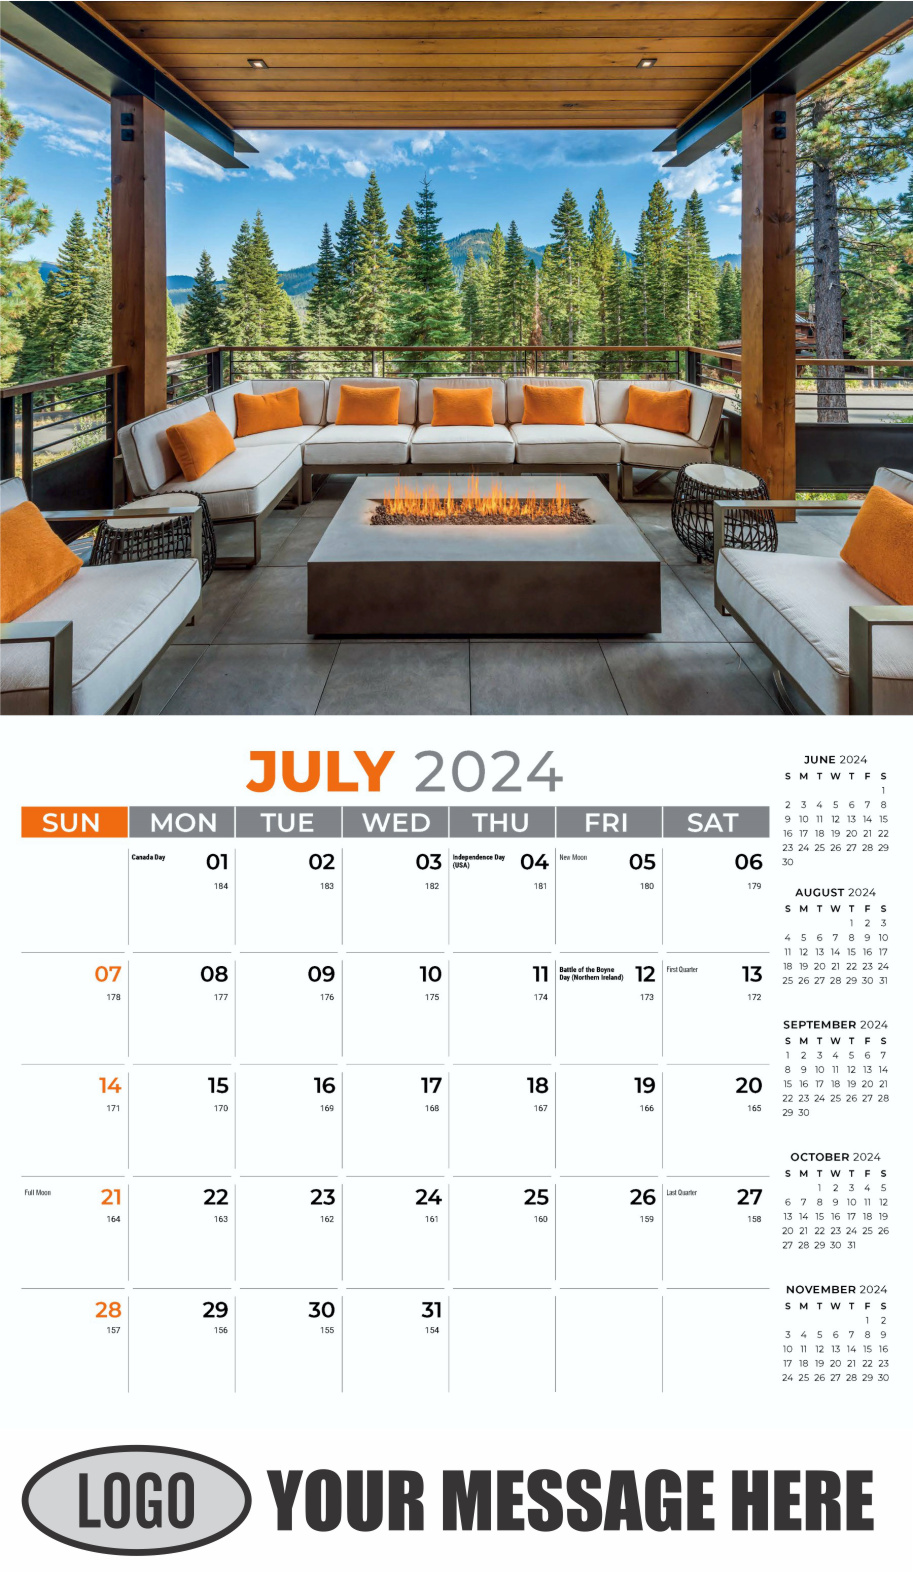 Decor and Design 2024 Interior Design Business Promotional Calendar - July